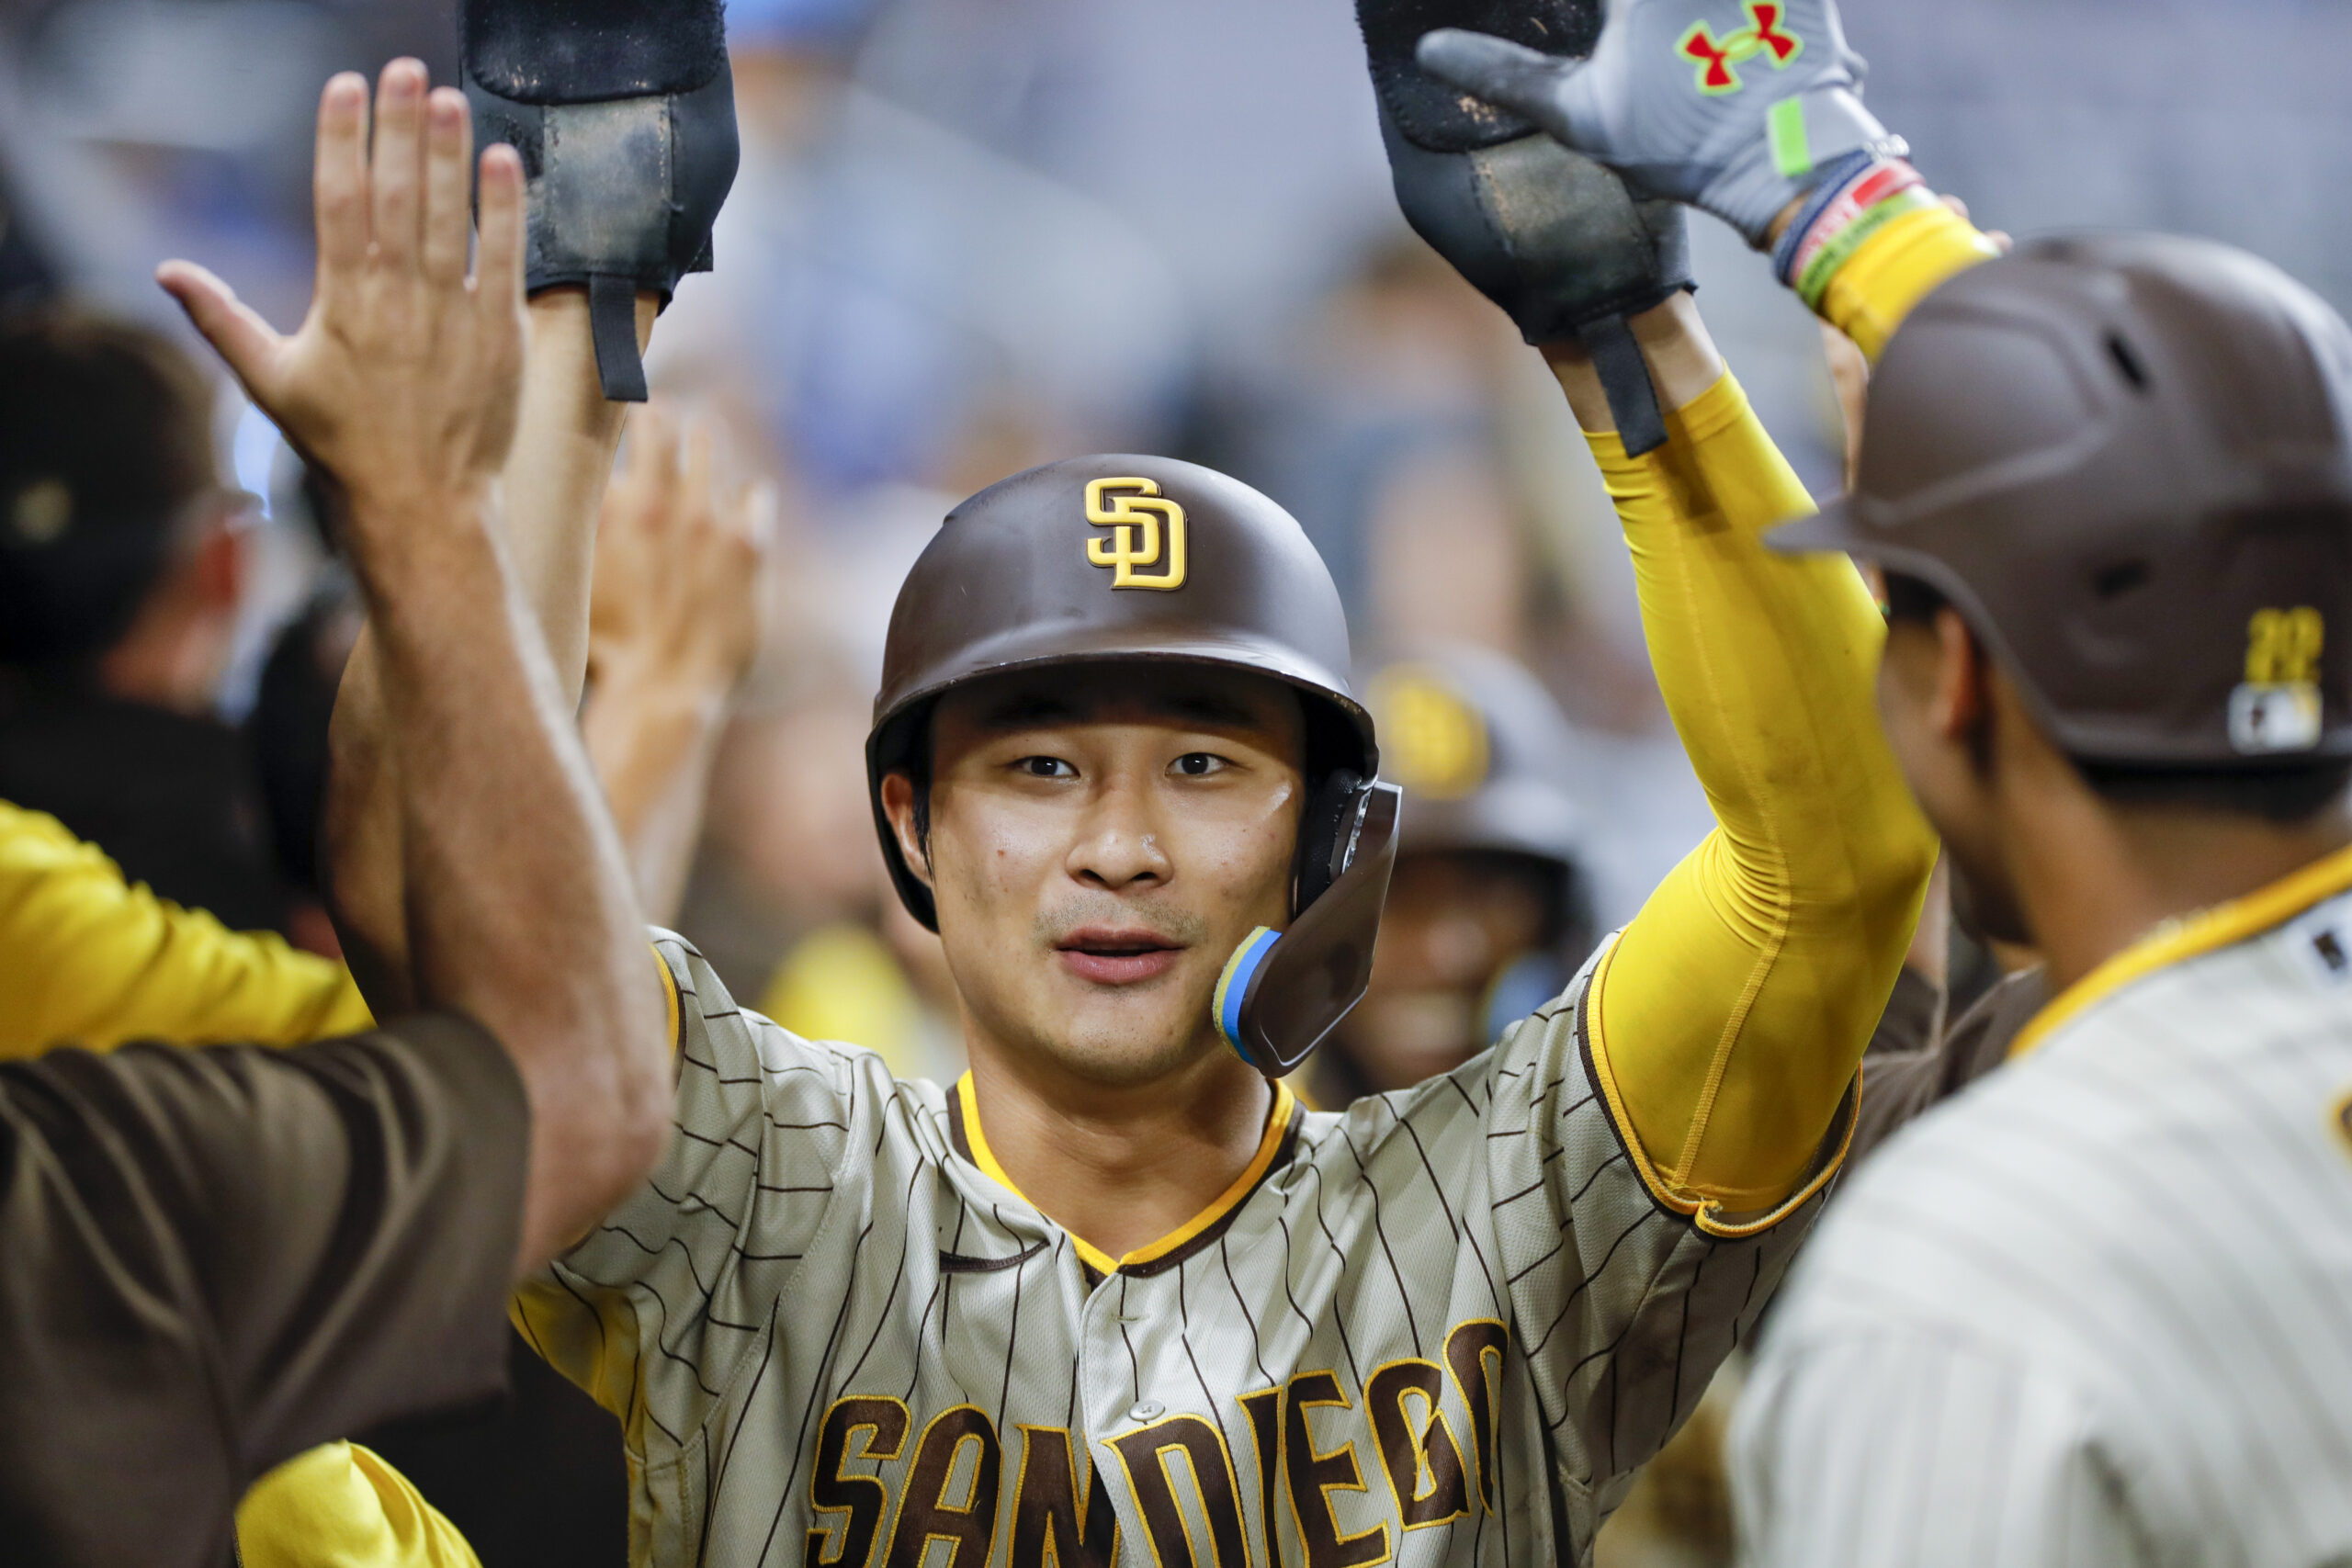 Ha-Seong Kim hits his first MLB grand slam